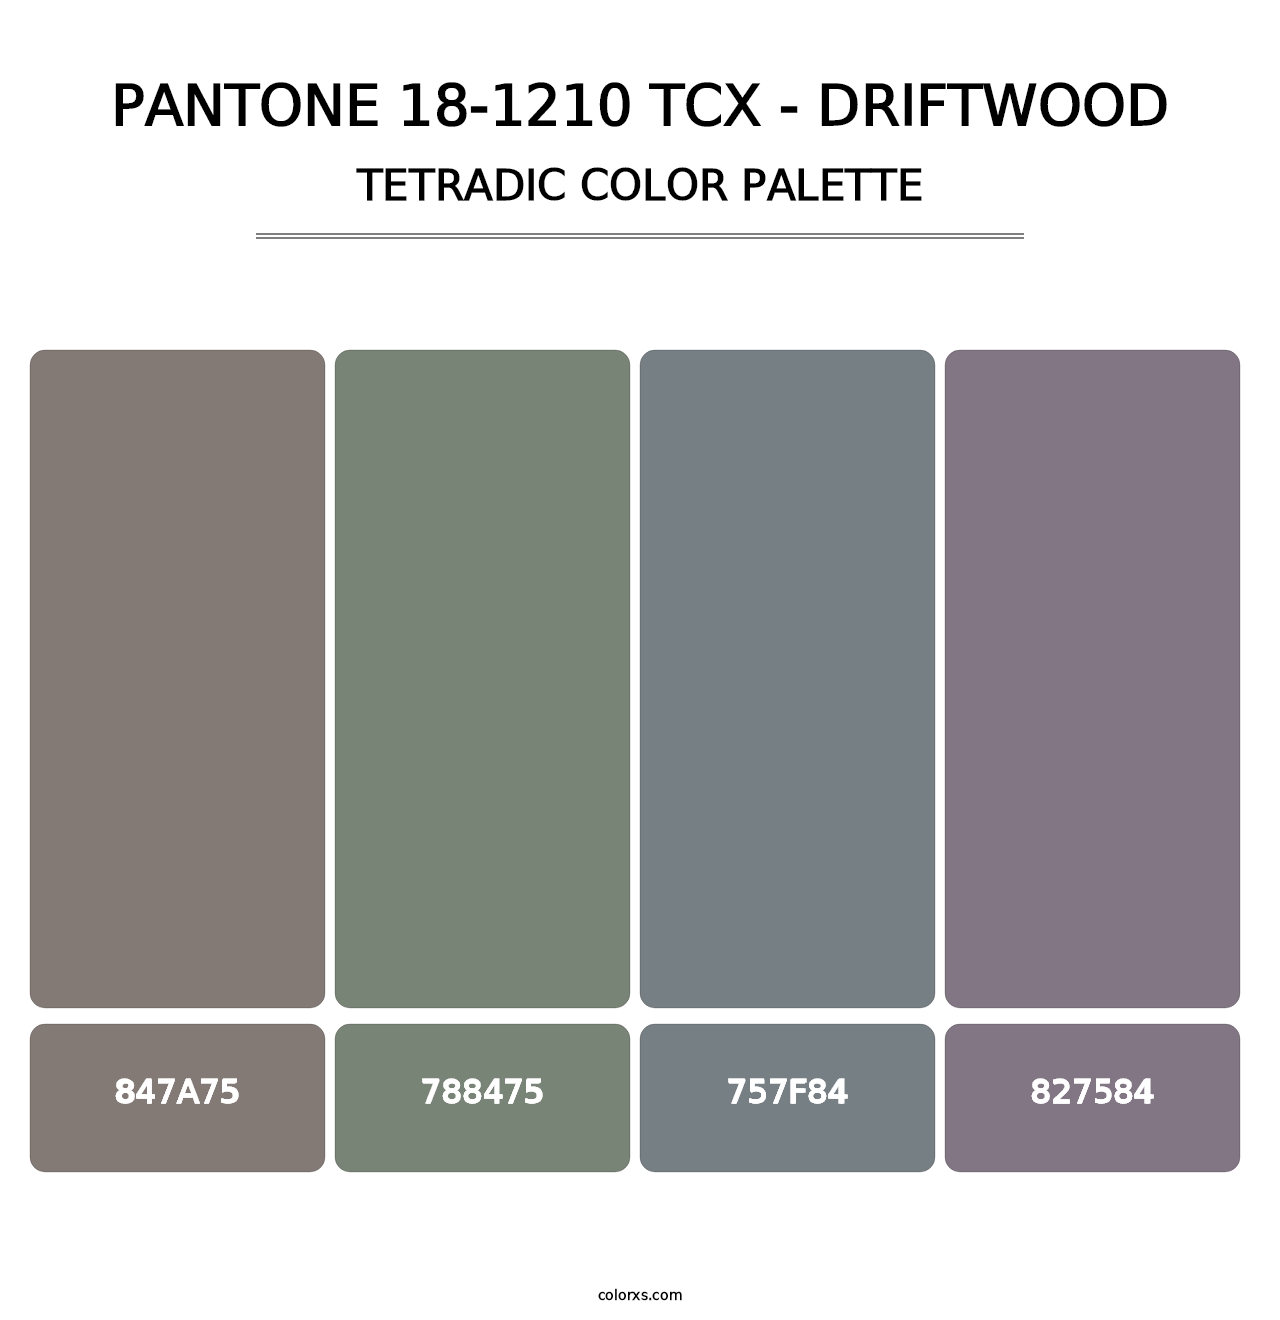 PANTONE 18-1210 TCX - Driftwood - Tetradic Color Palette